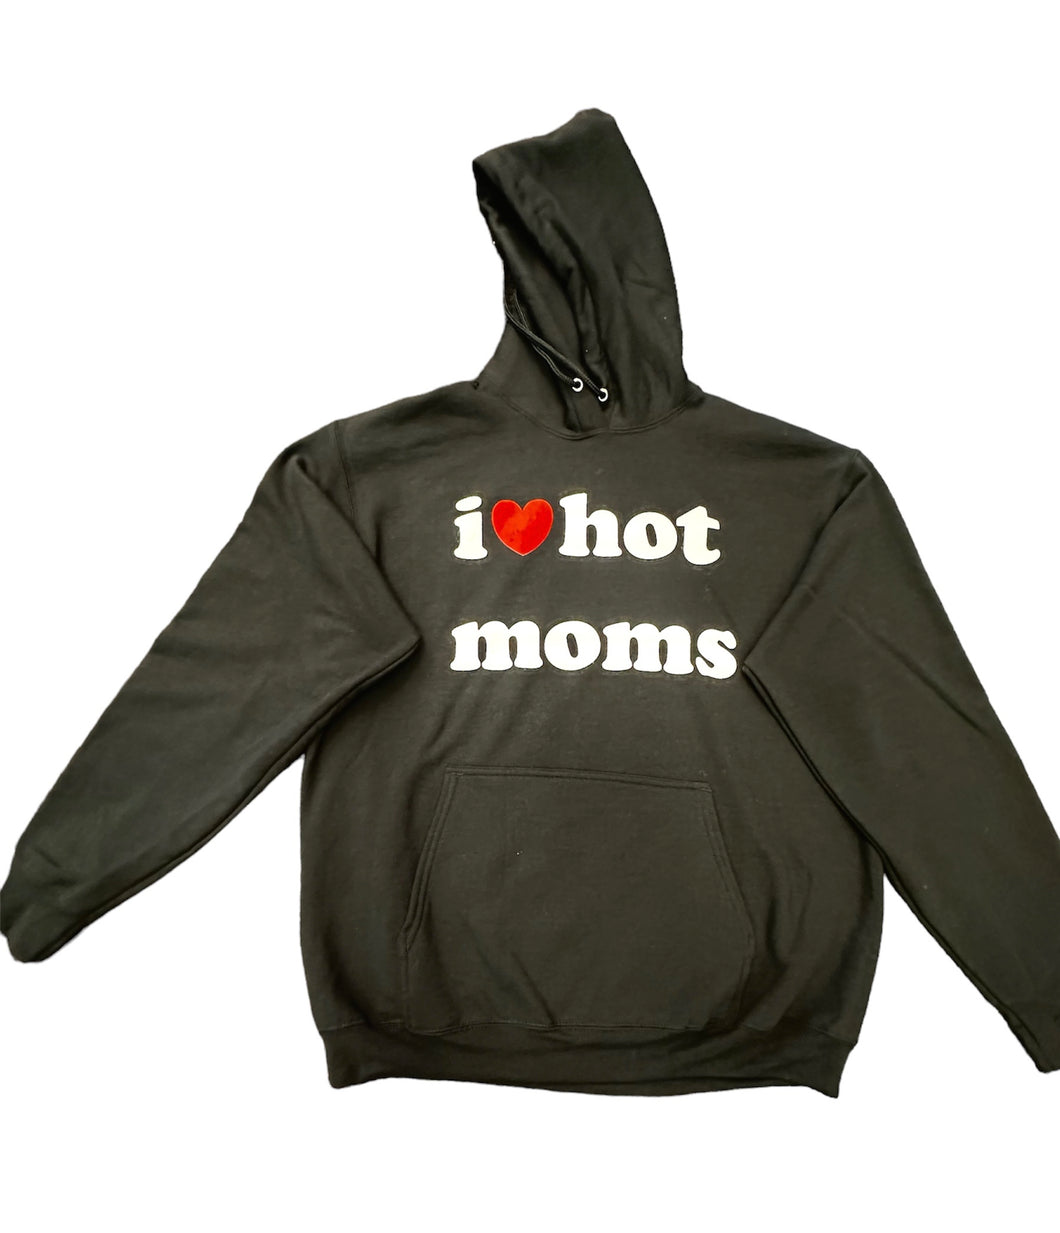 Hot mom's sweater